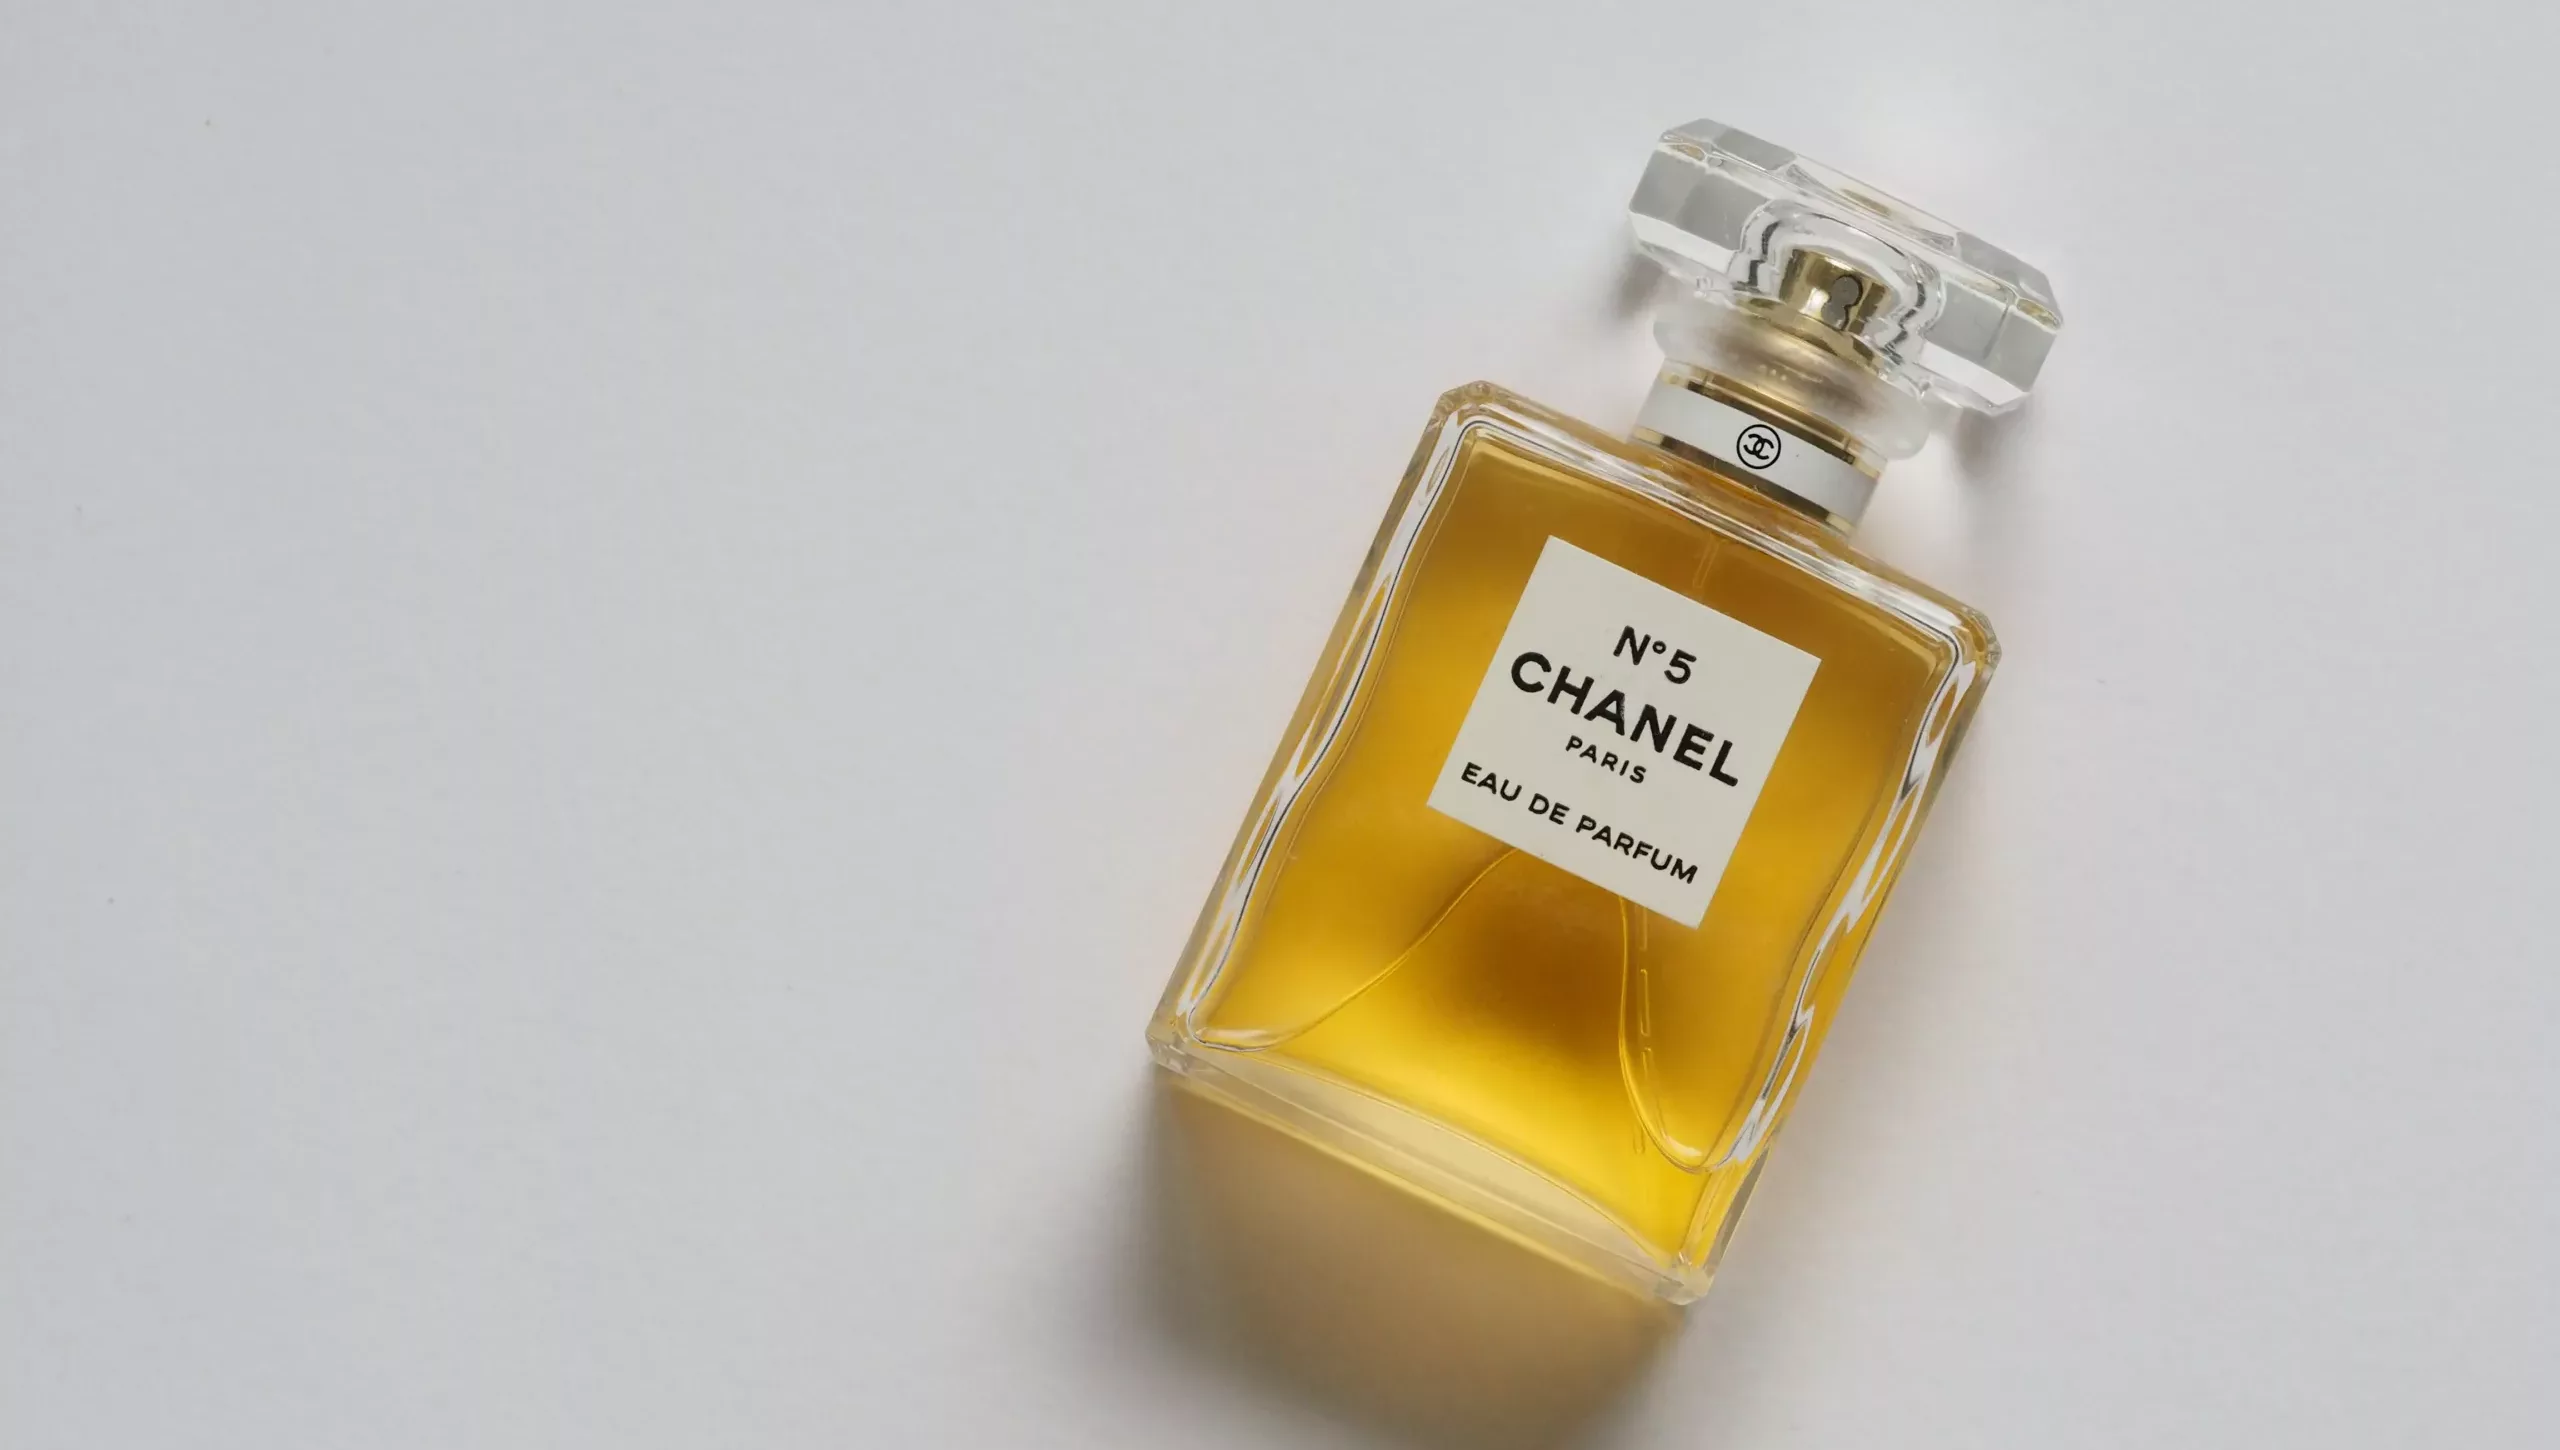 Chanel No 5, coco Chanel, vogue, Coco, Chanel, brands, Perfume